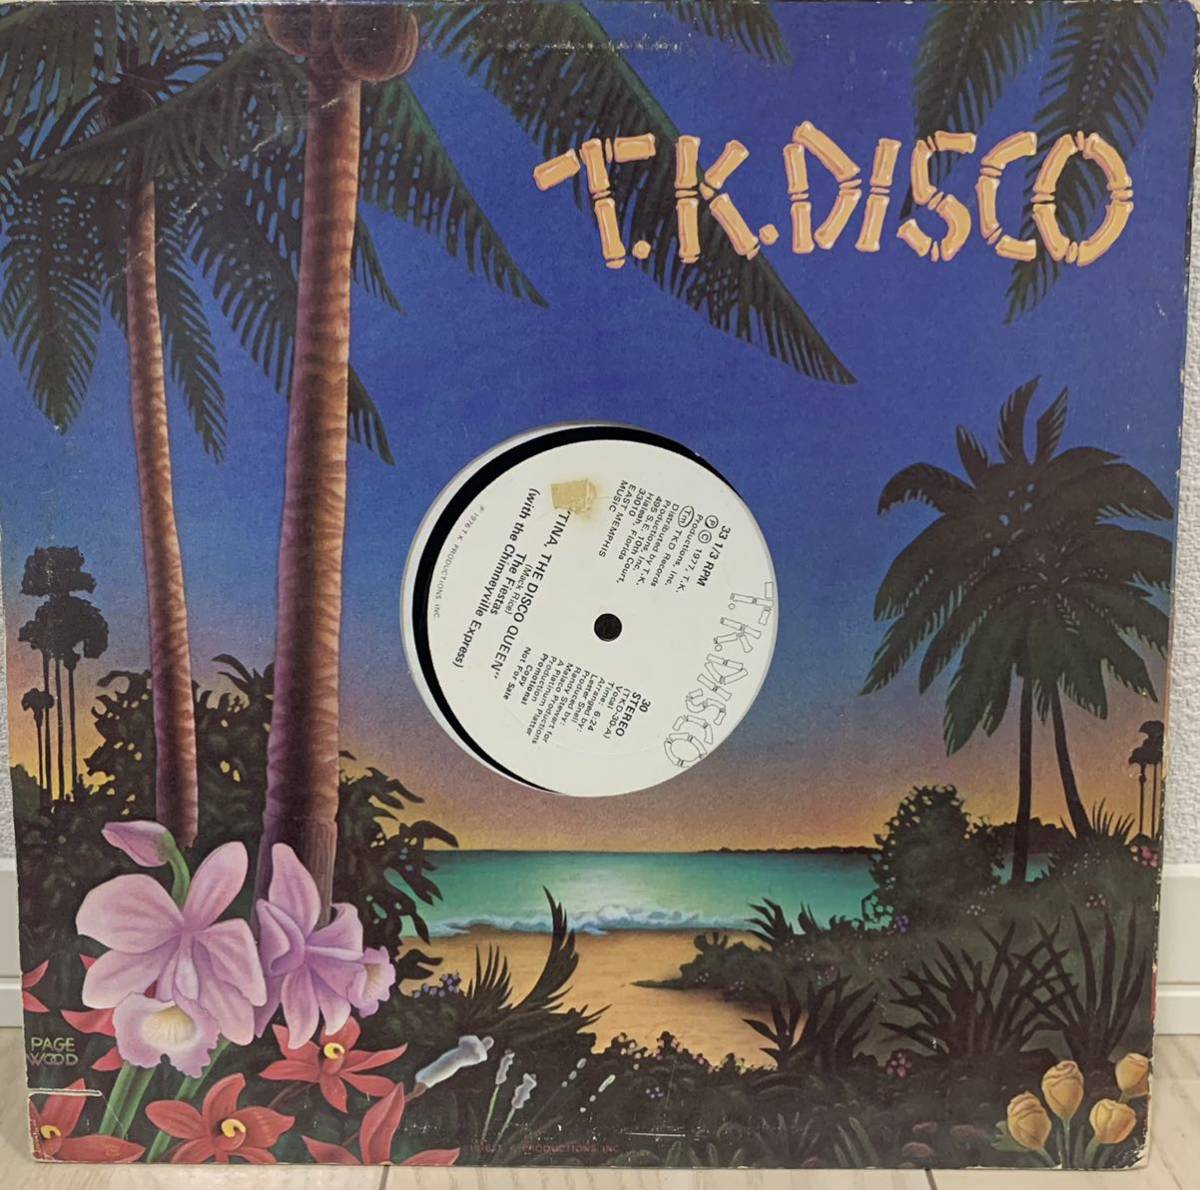 12inch TINA THE DISCO QUEEN/THE FIESTAS *TK DISCO オリジナル盤 1977 T.K.DISCO アナログ盤 レコード_画像1